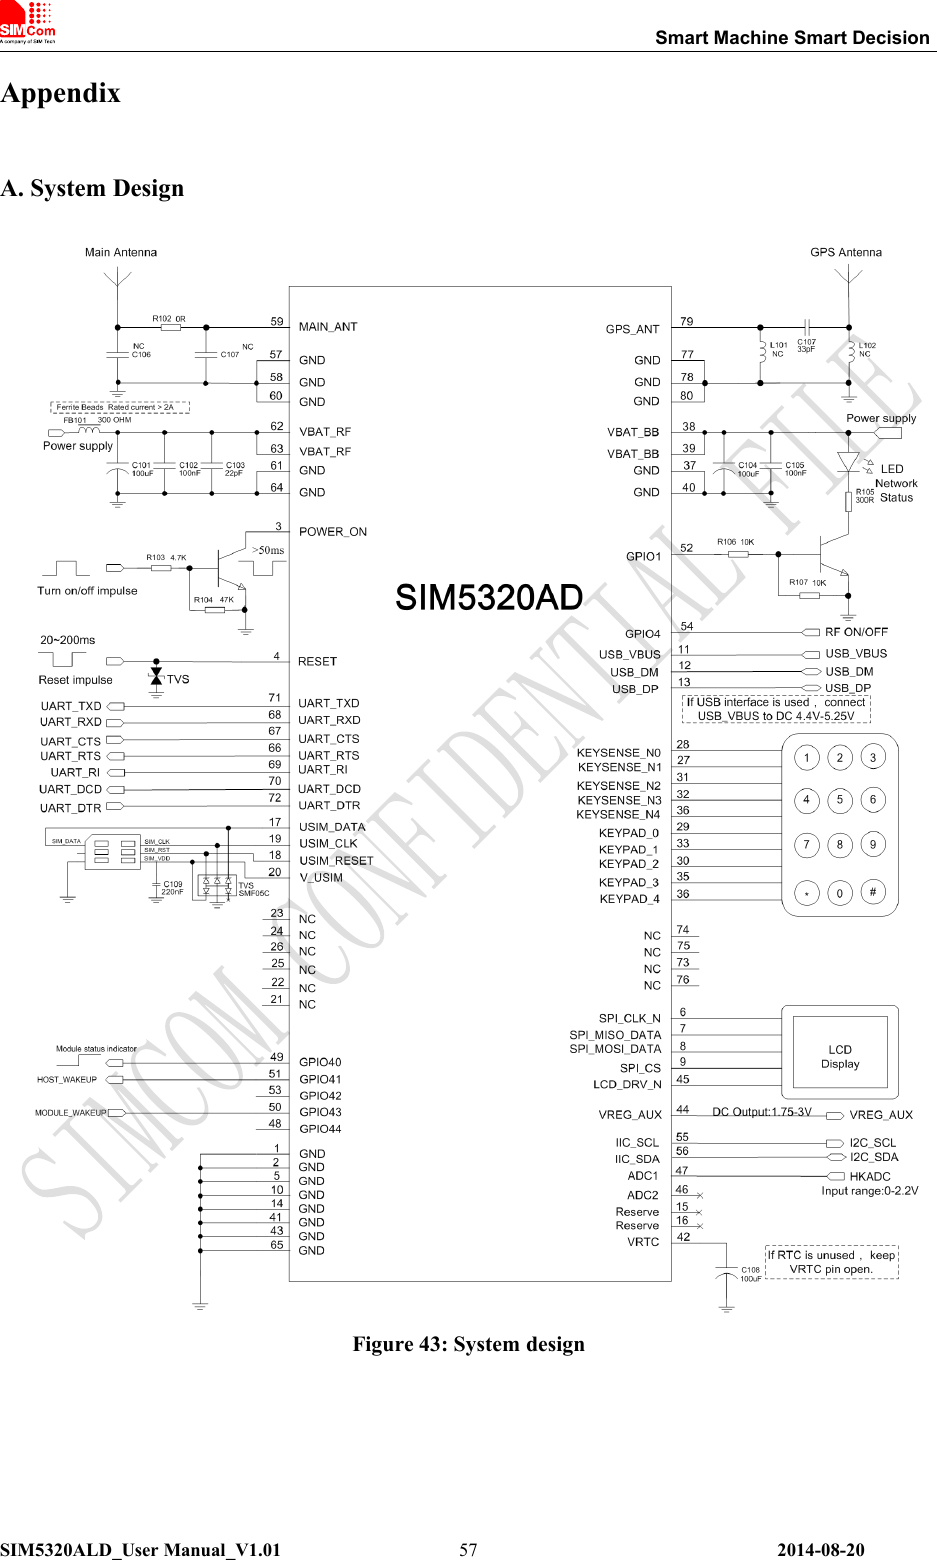 Smart Machine Smart DecisionSIM5320ALD_User Manual_V1.01 2014-08-2057AppendixA. System DesignFigure 43: System design